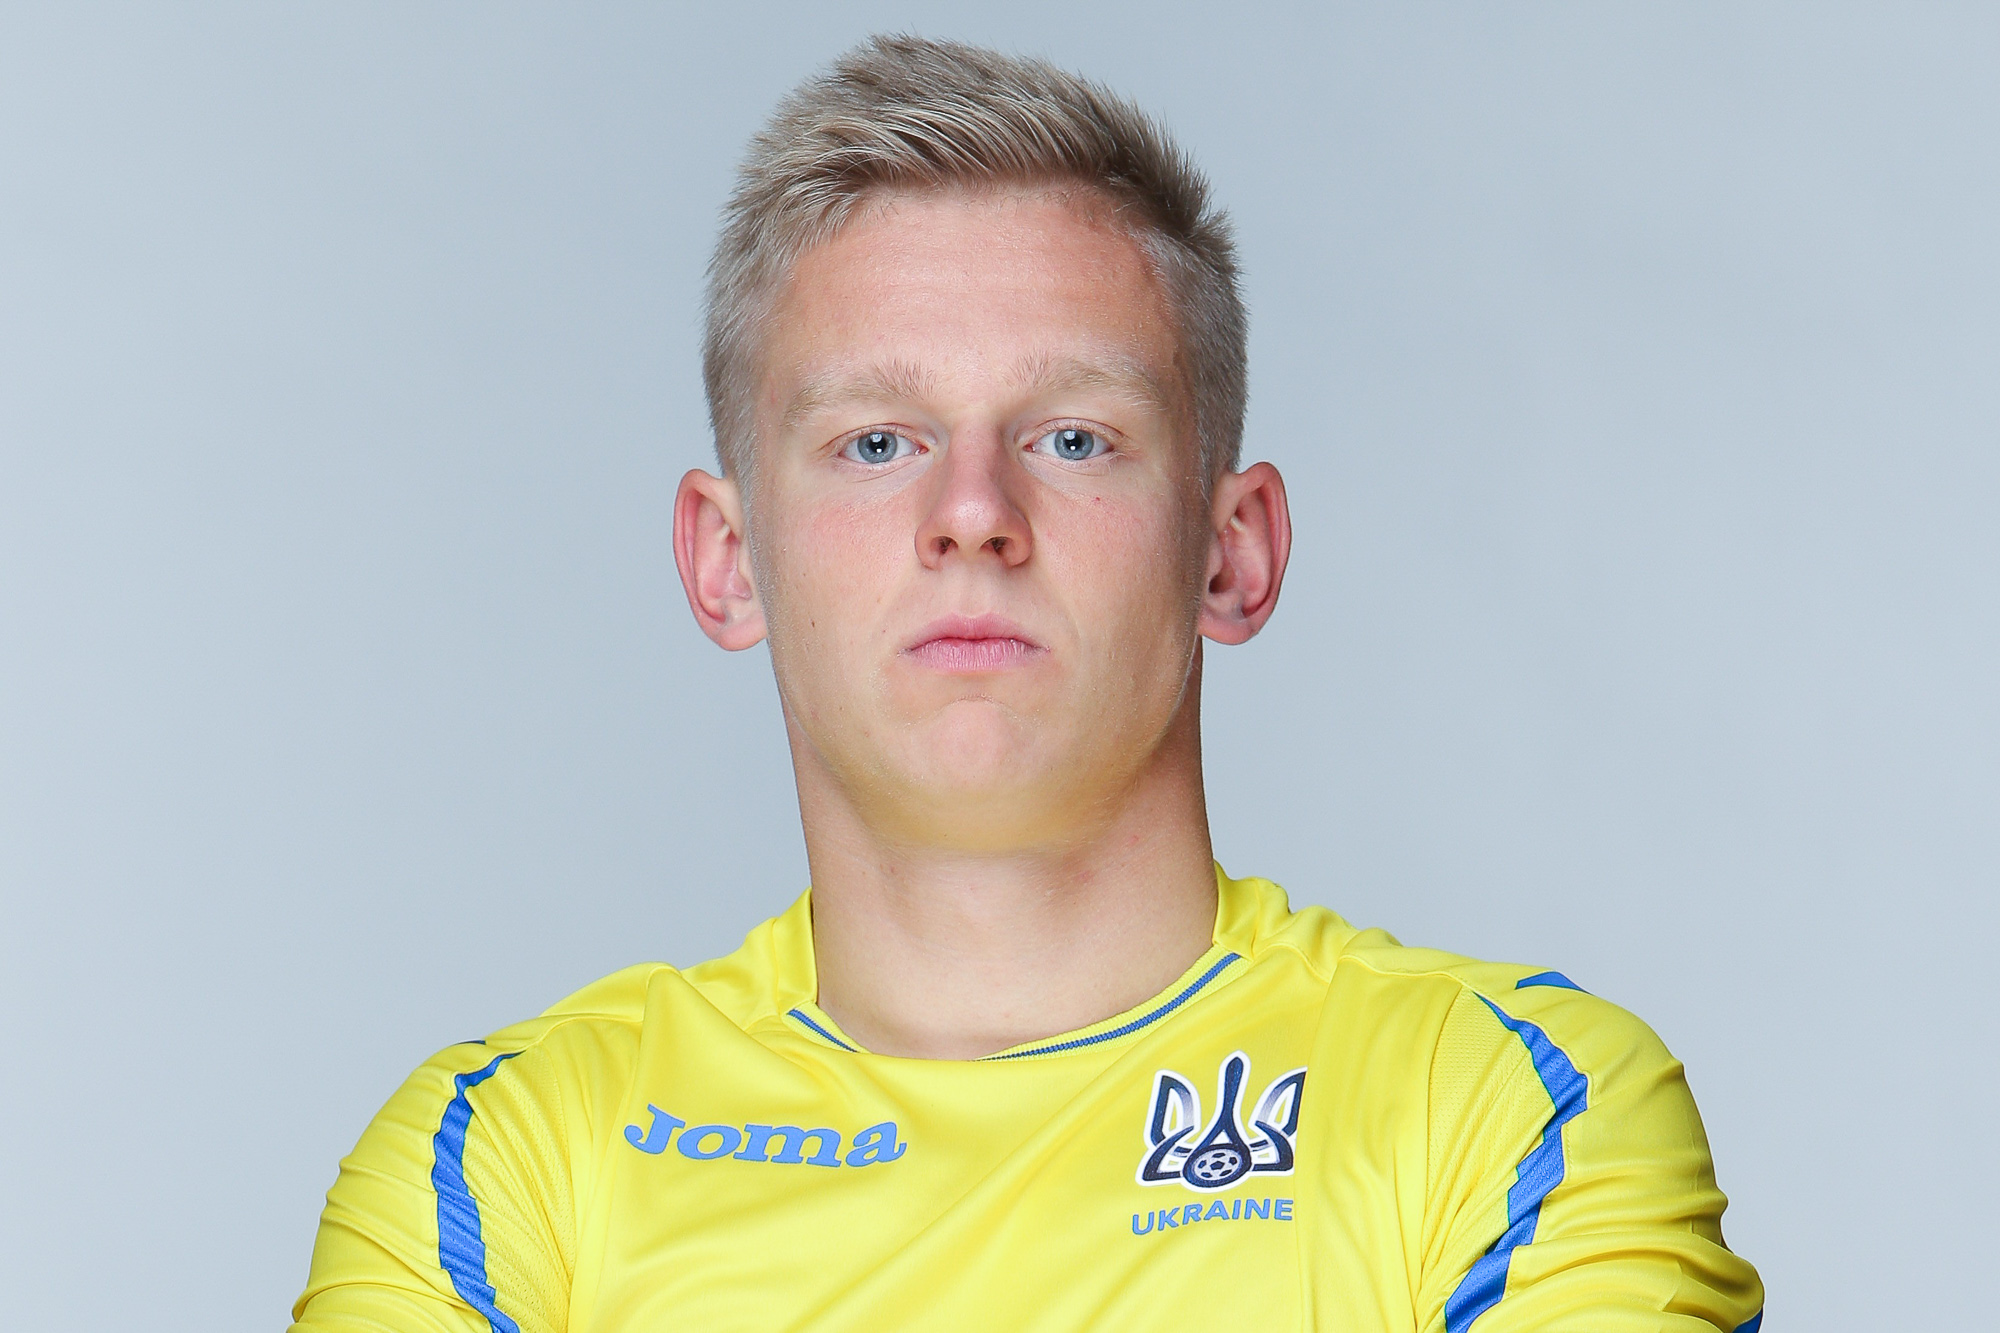 Oleksandr Zinchenko: From amateur to Ukraine’s top professional soccer player